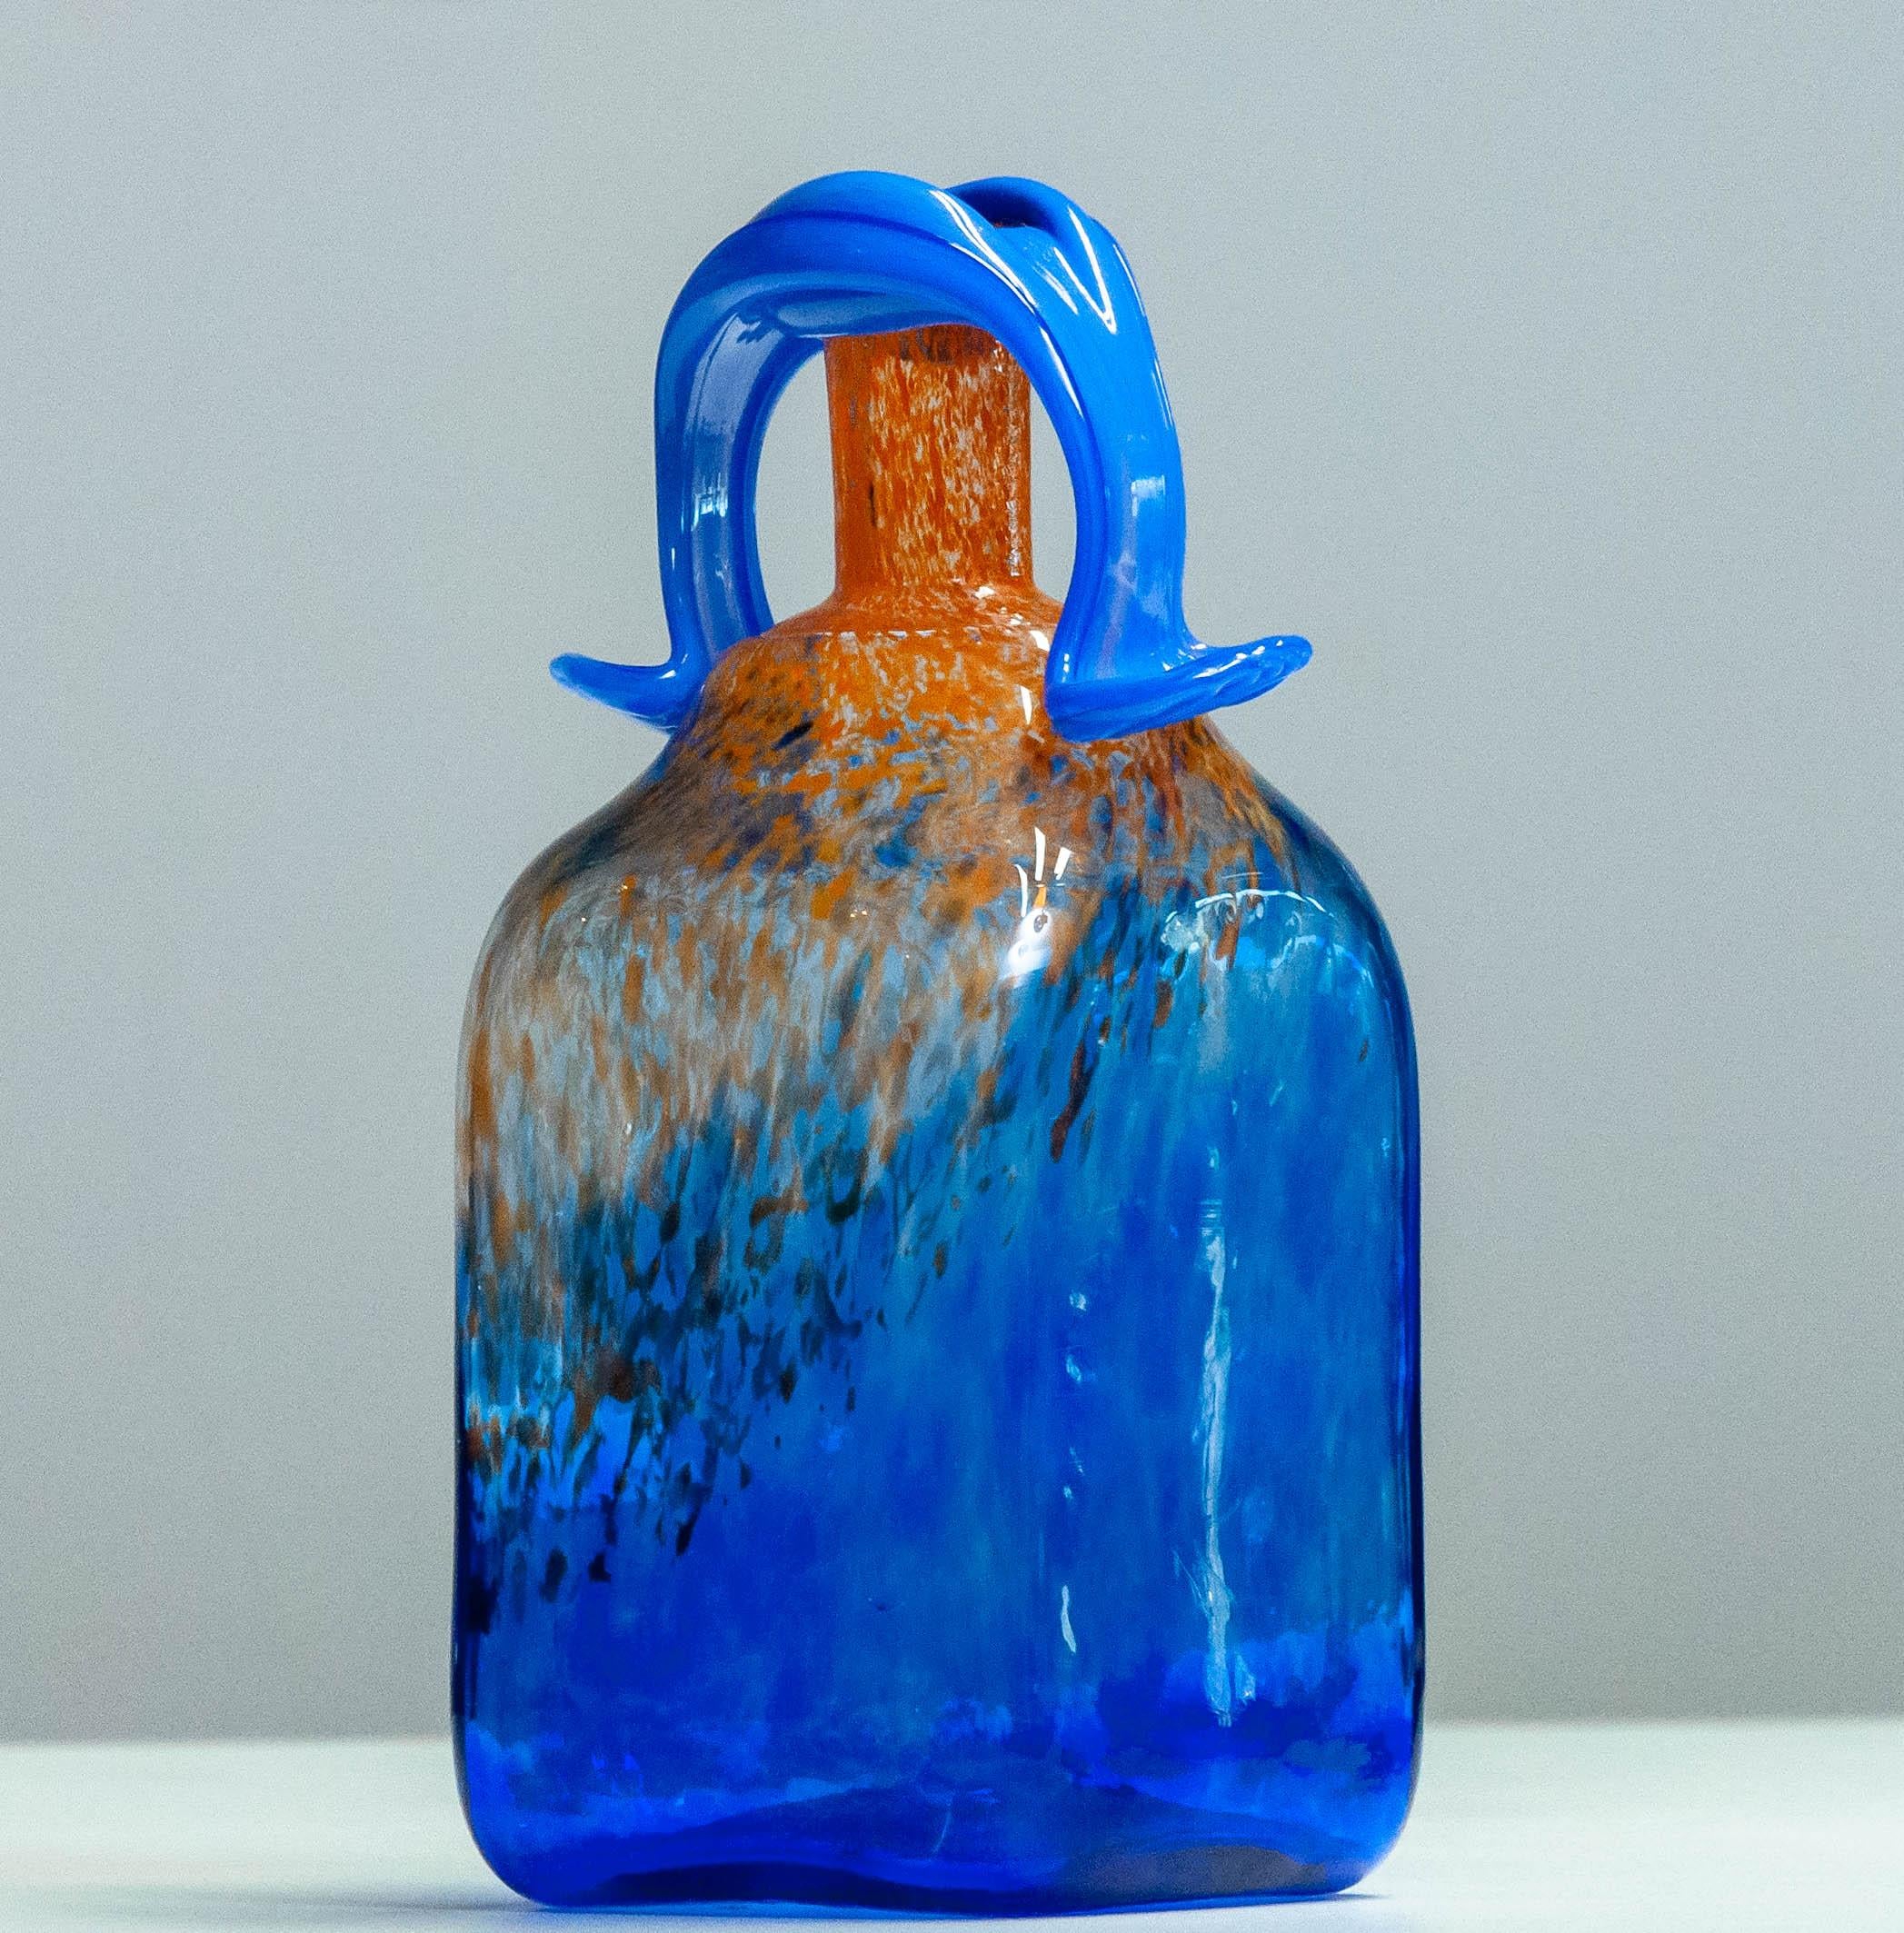 1980s Blue Art Glass Bottle Handmade by Staffan Gellerstedt at Studio Glashyttan For Sale 2